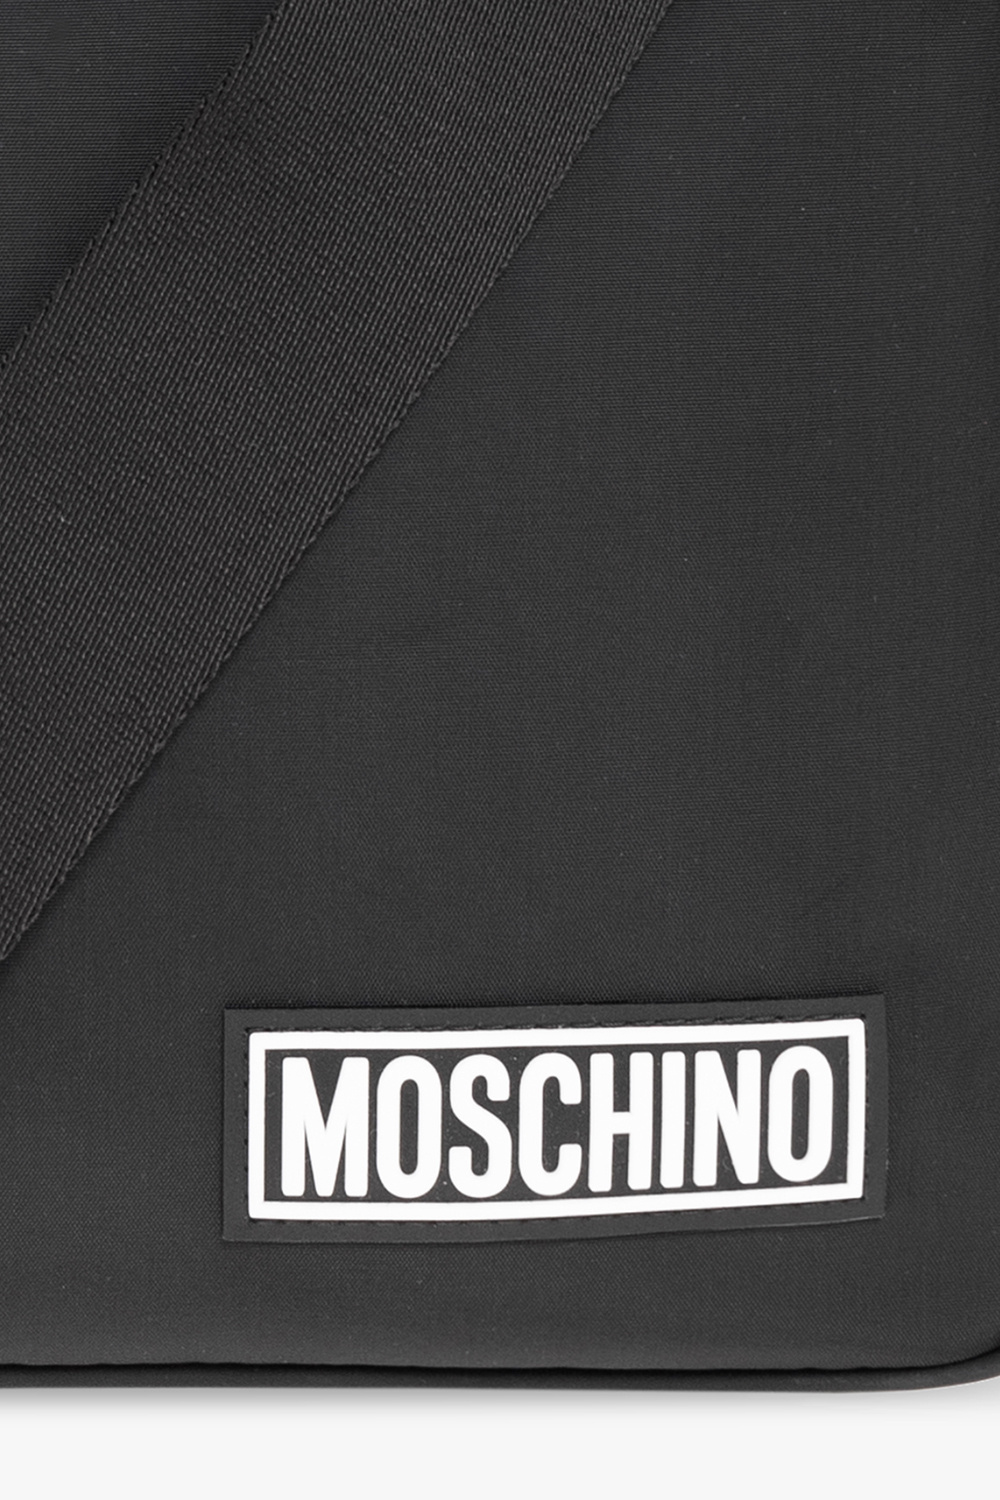 Moschino Michael Kors Collection Carmen monogram print extra-small tote bag